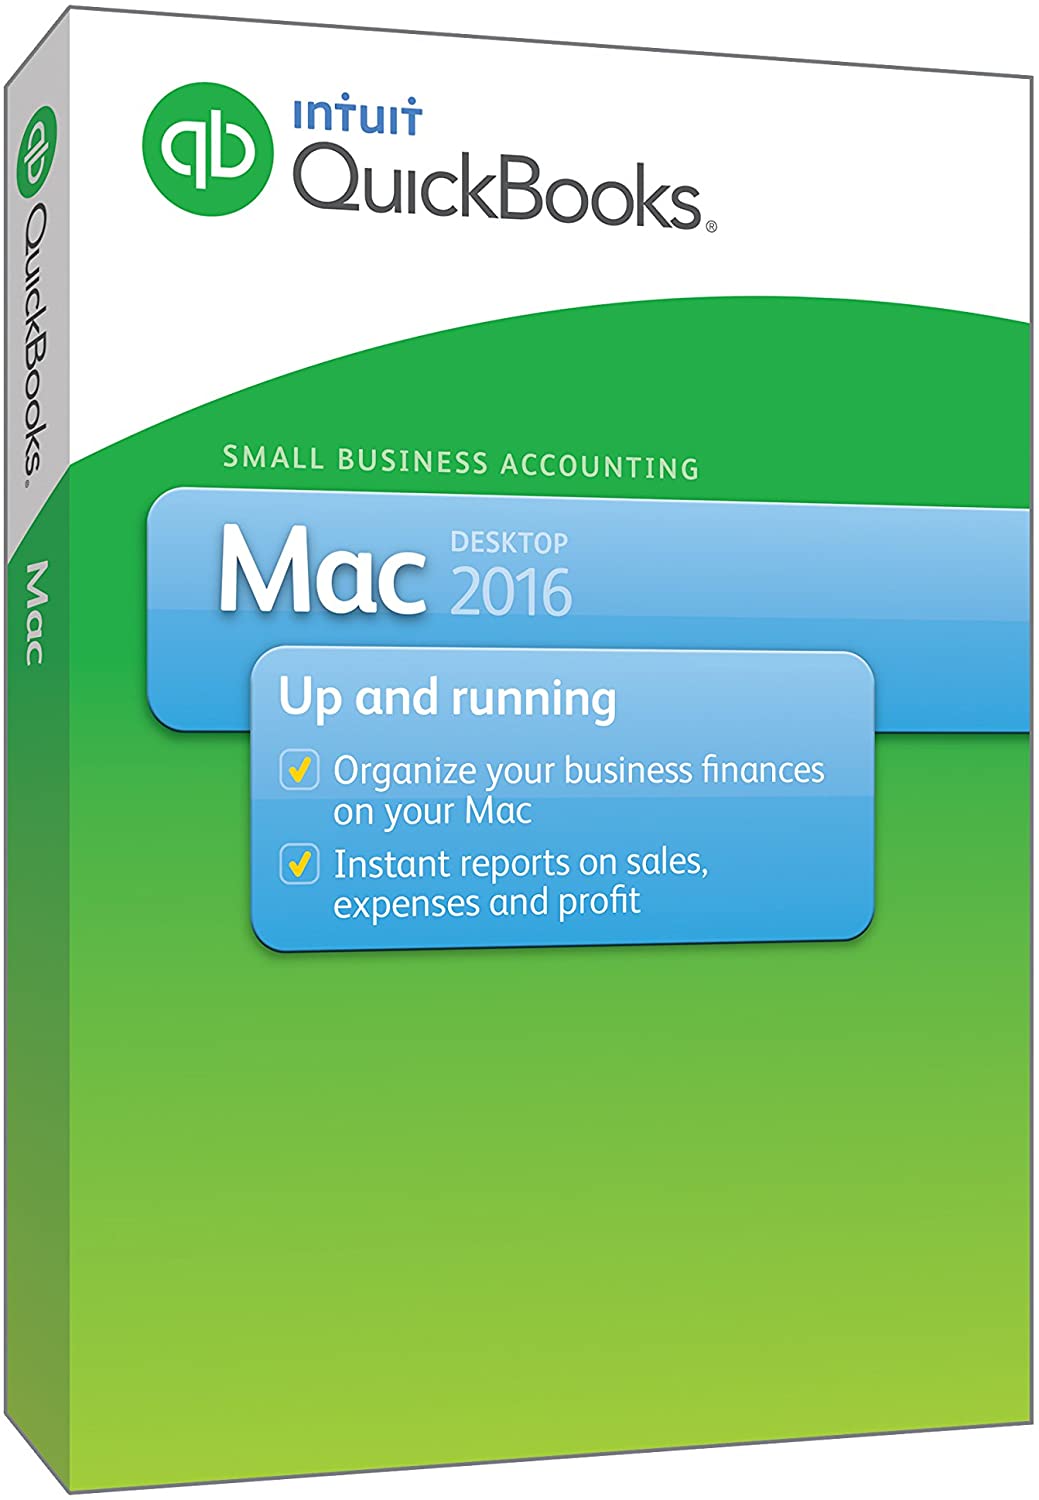 quickbooks for mac 2016 move address on checks